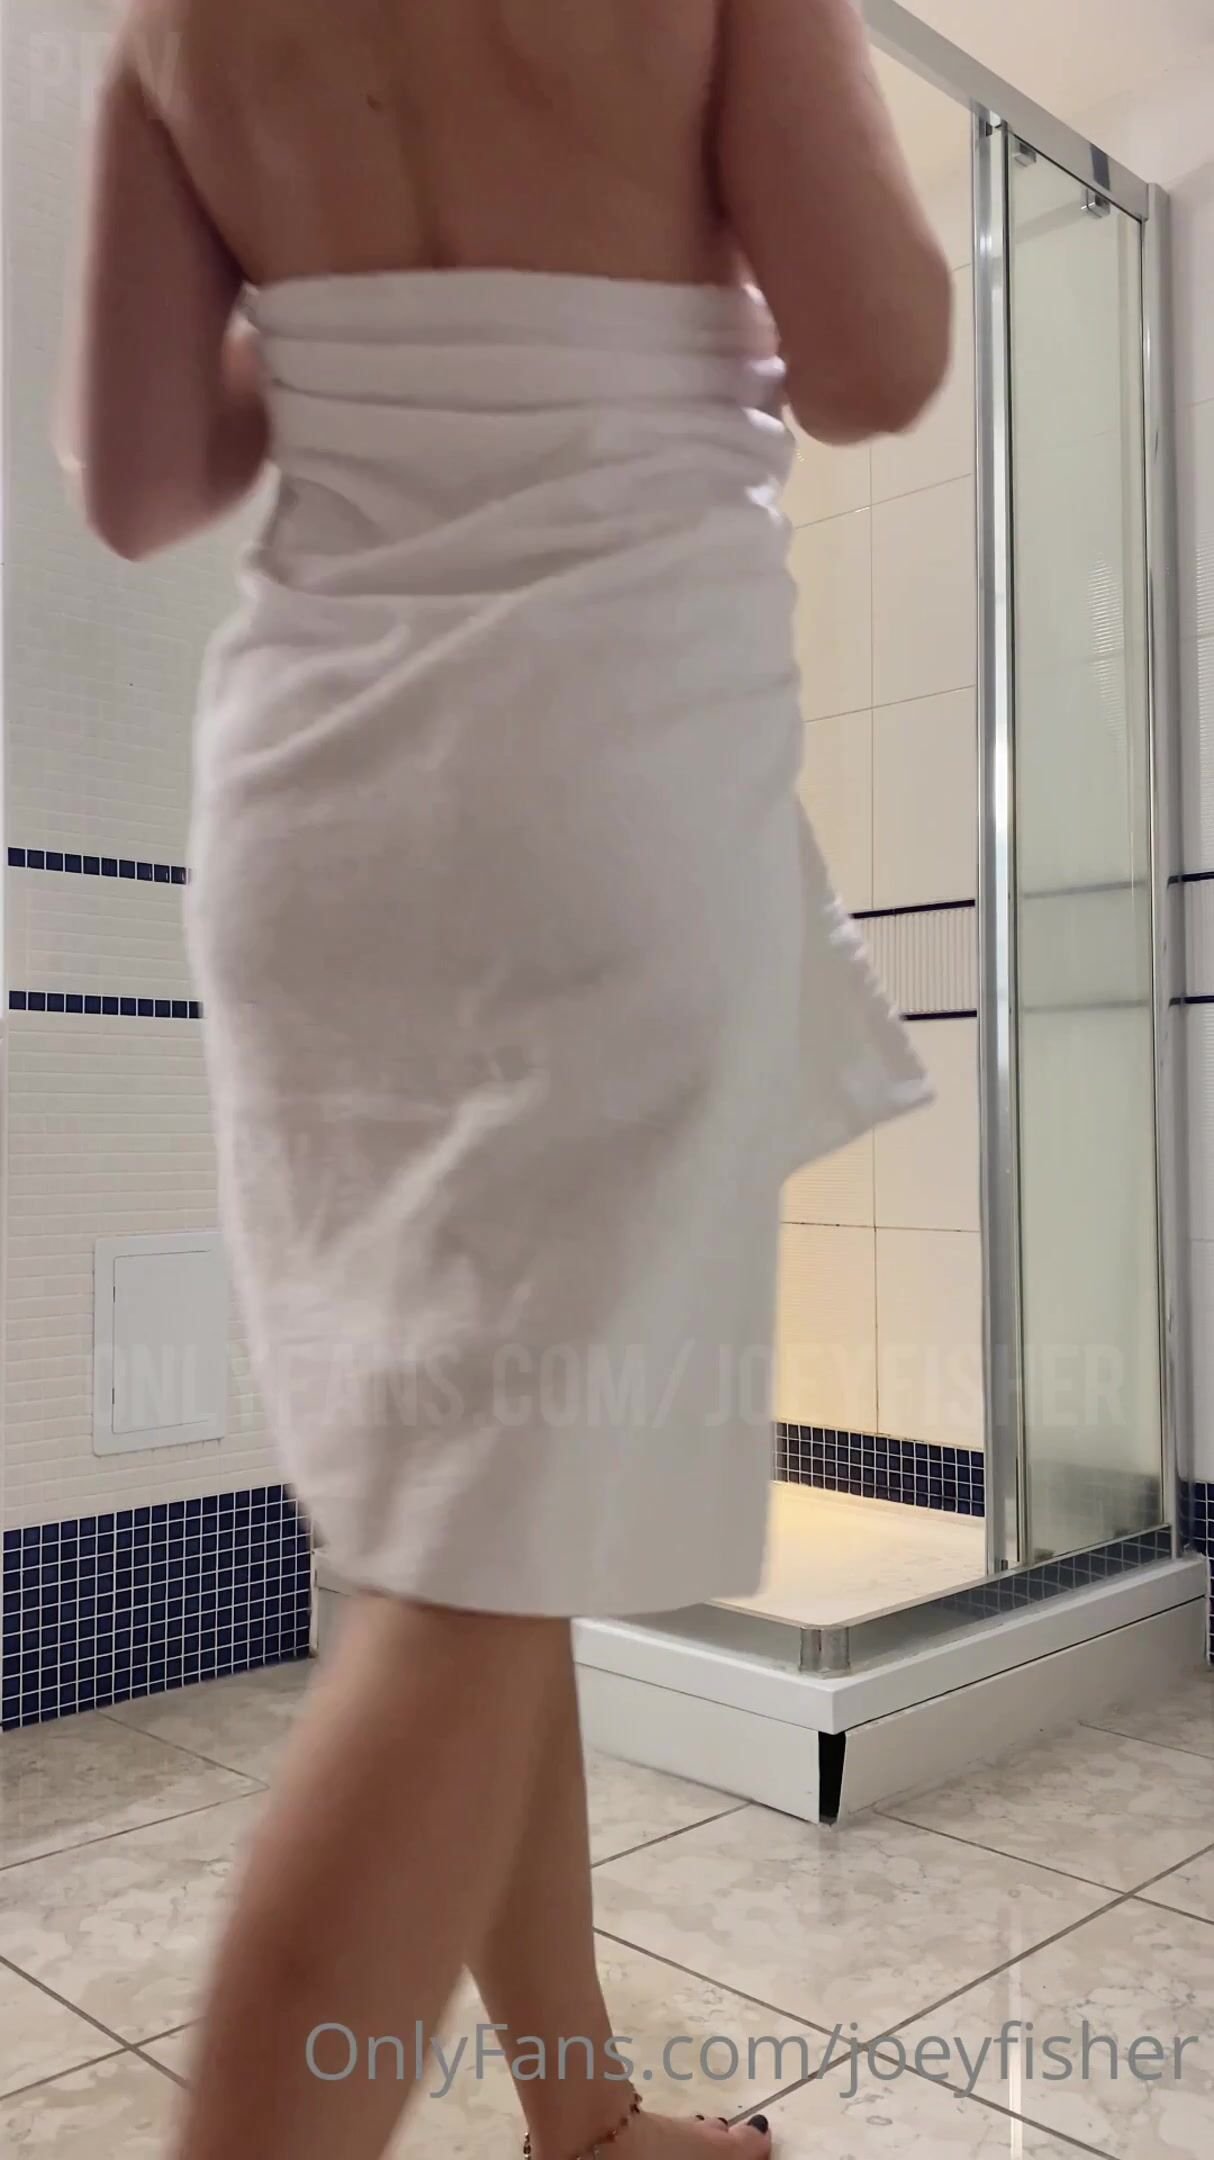 Joeyfisher Onlyfans Nude Shower Video Leaked 4K